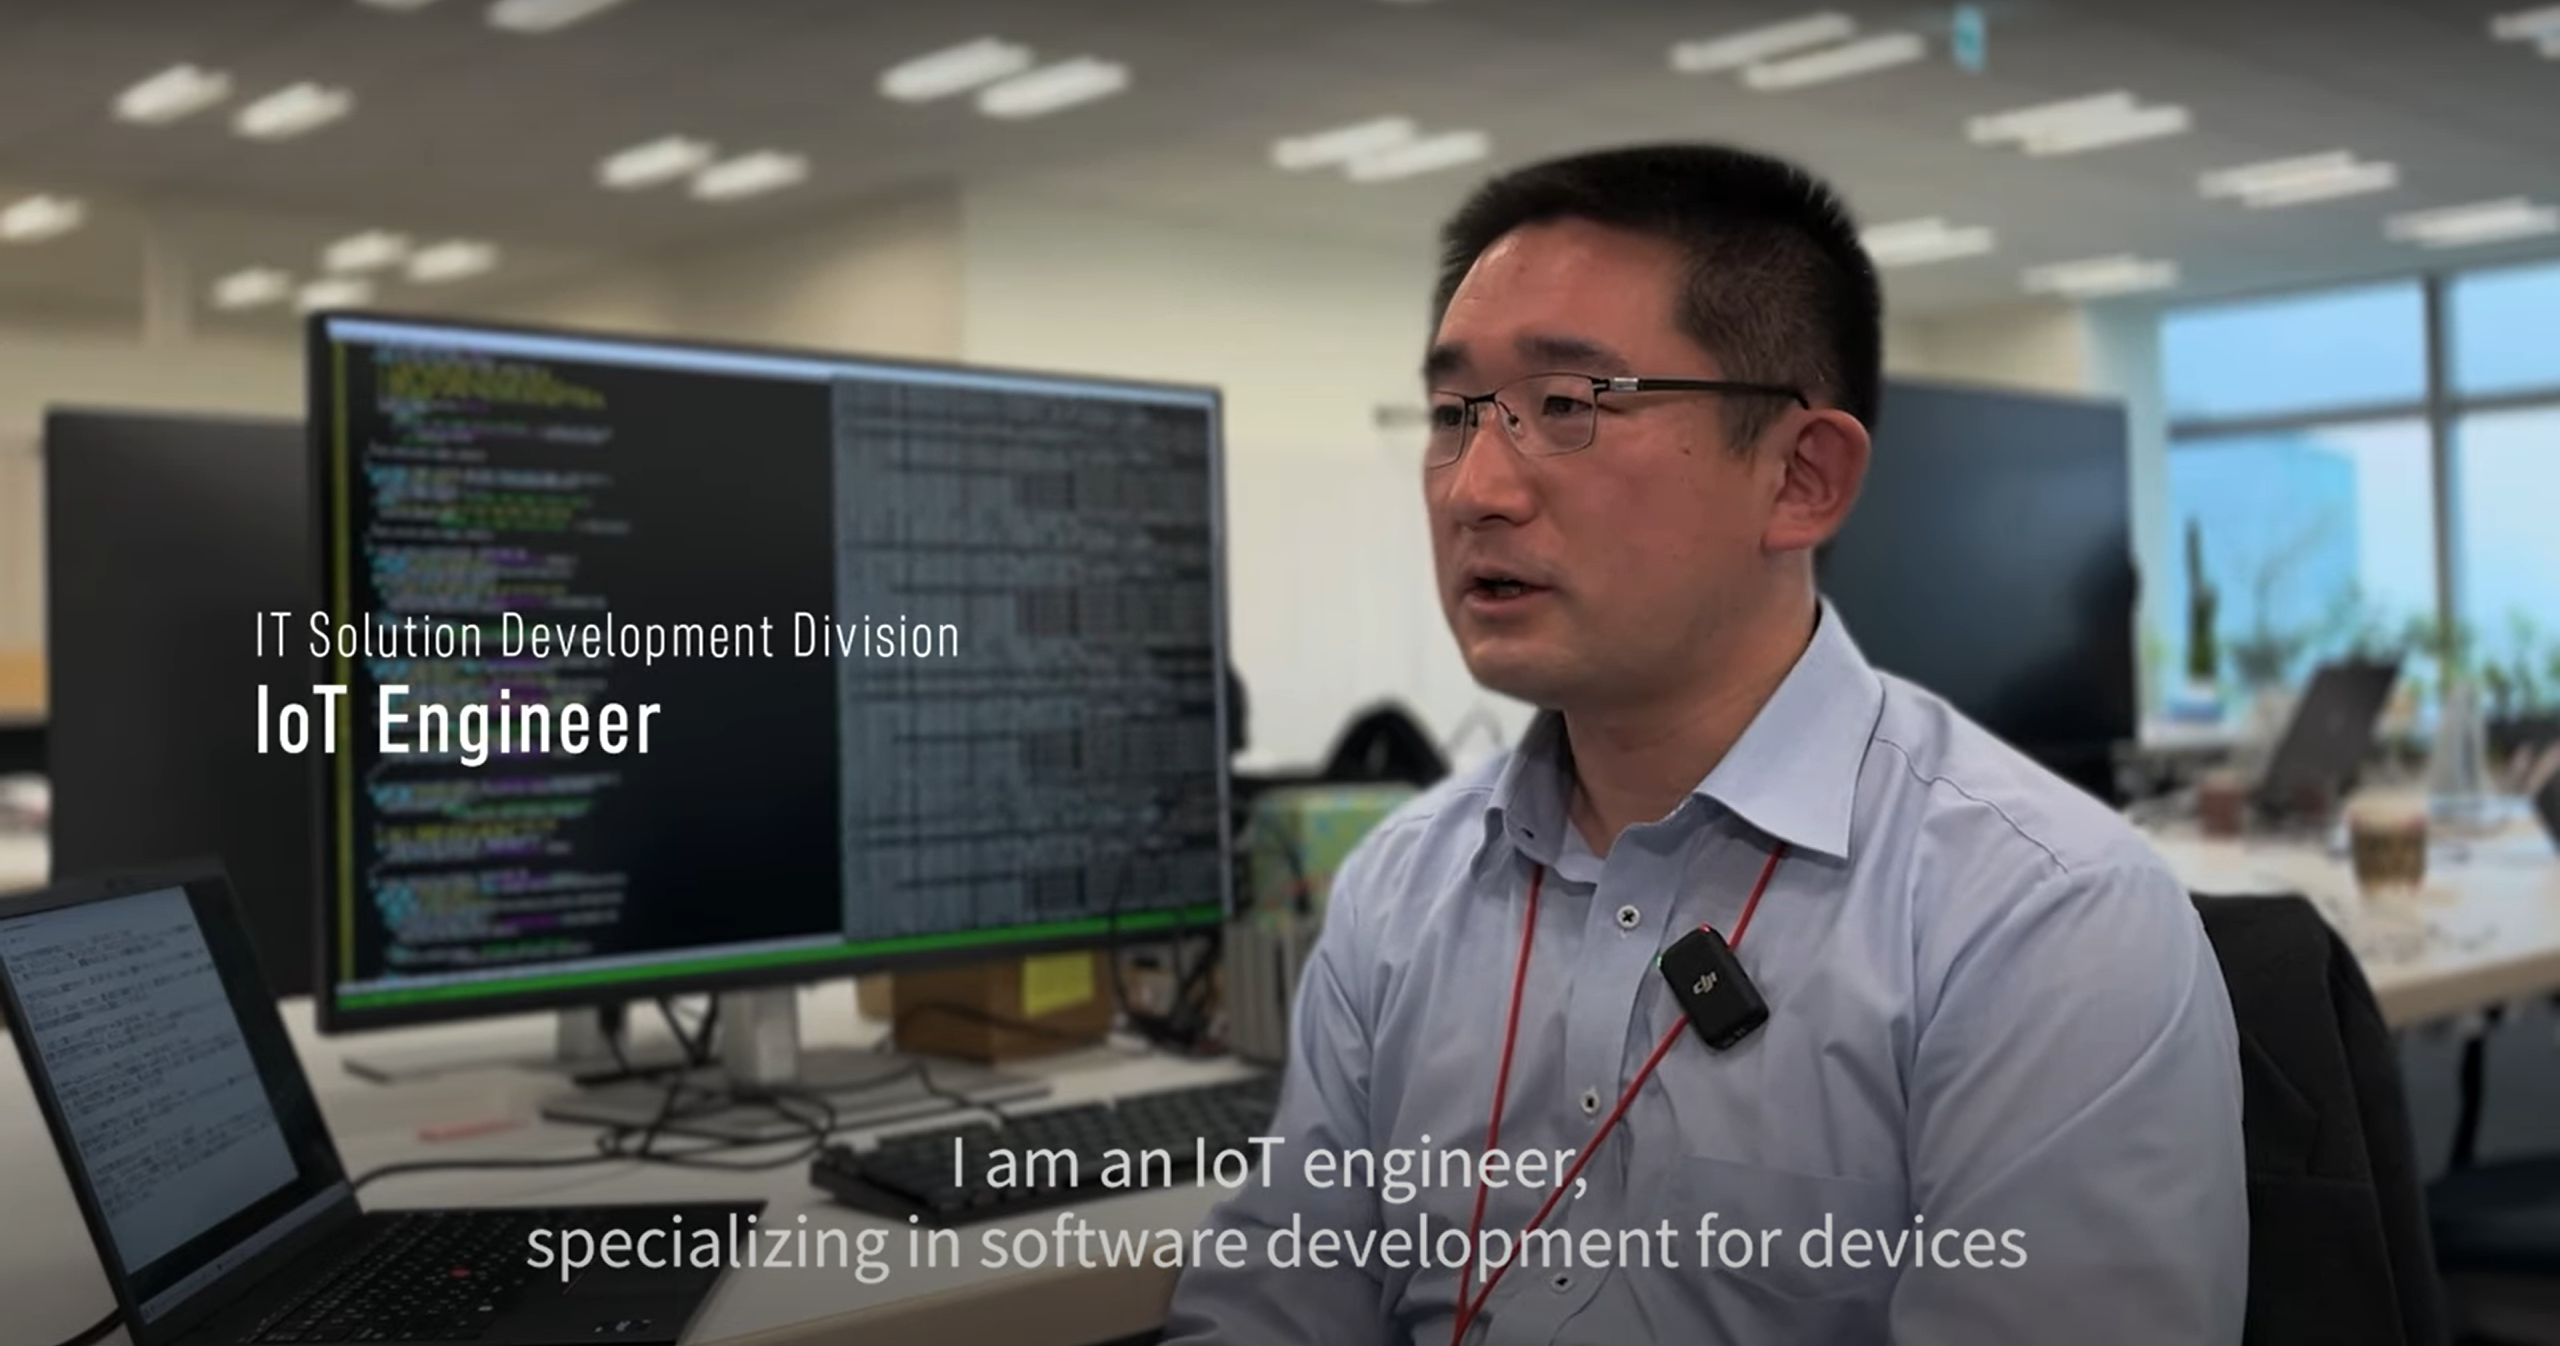 PowerX IT Solution Development Division (Tokyo)